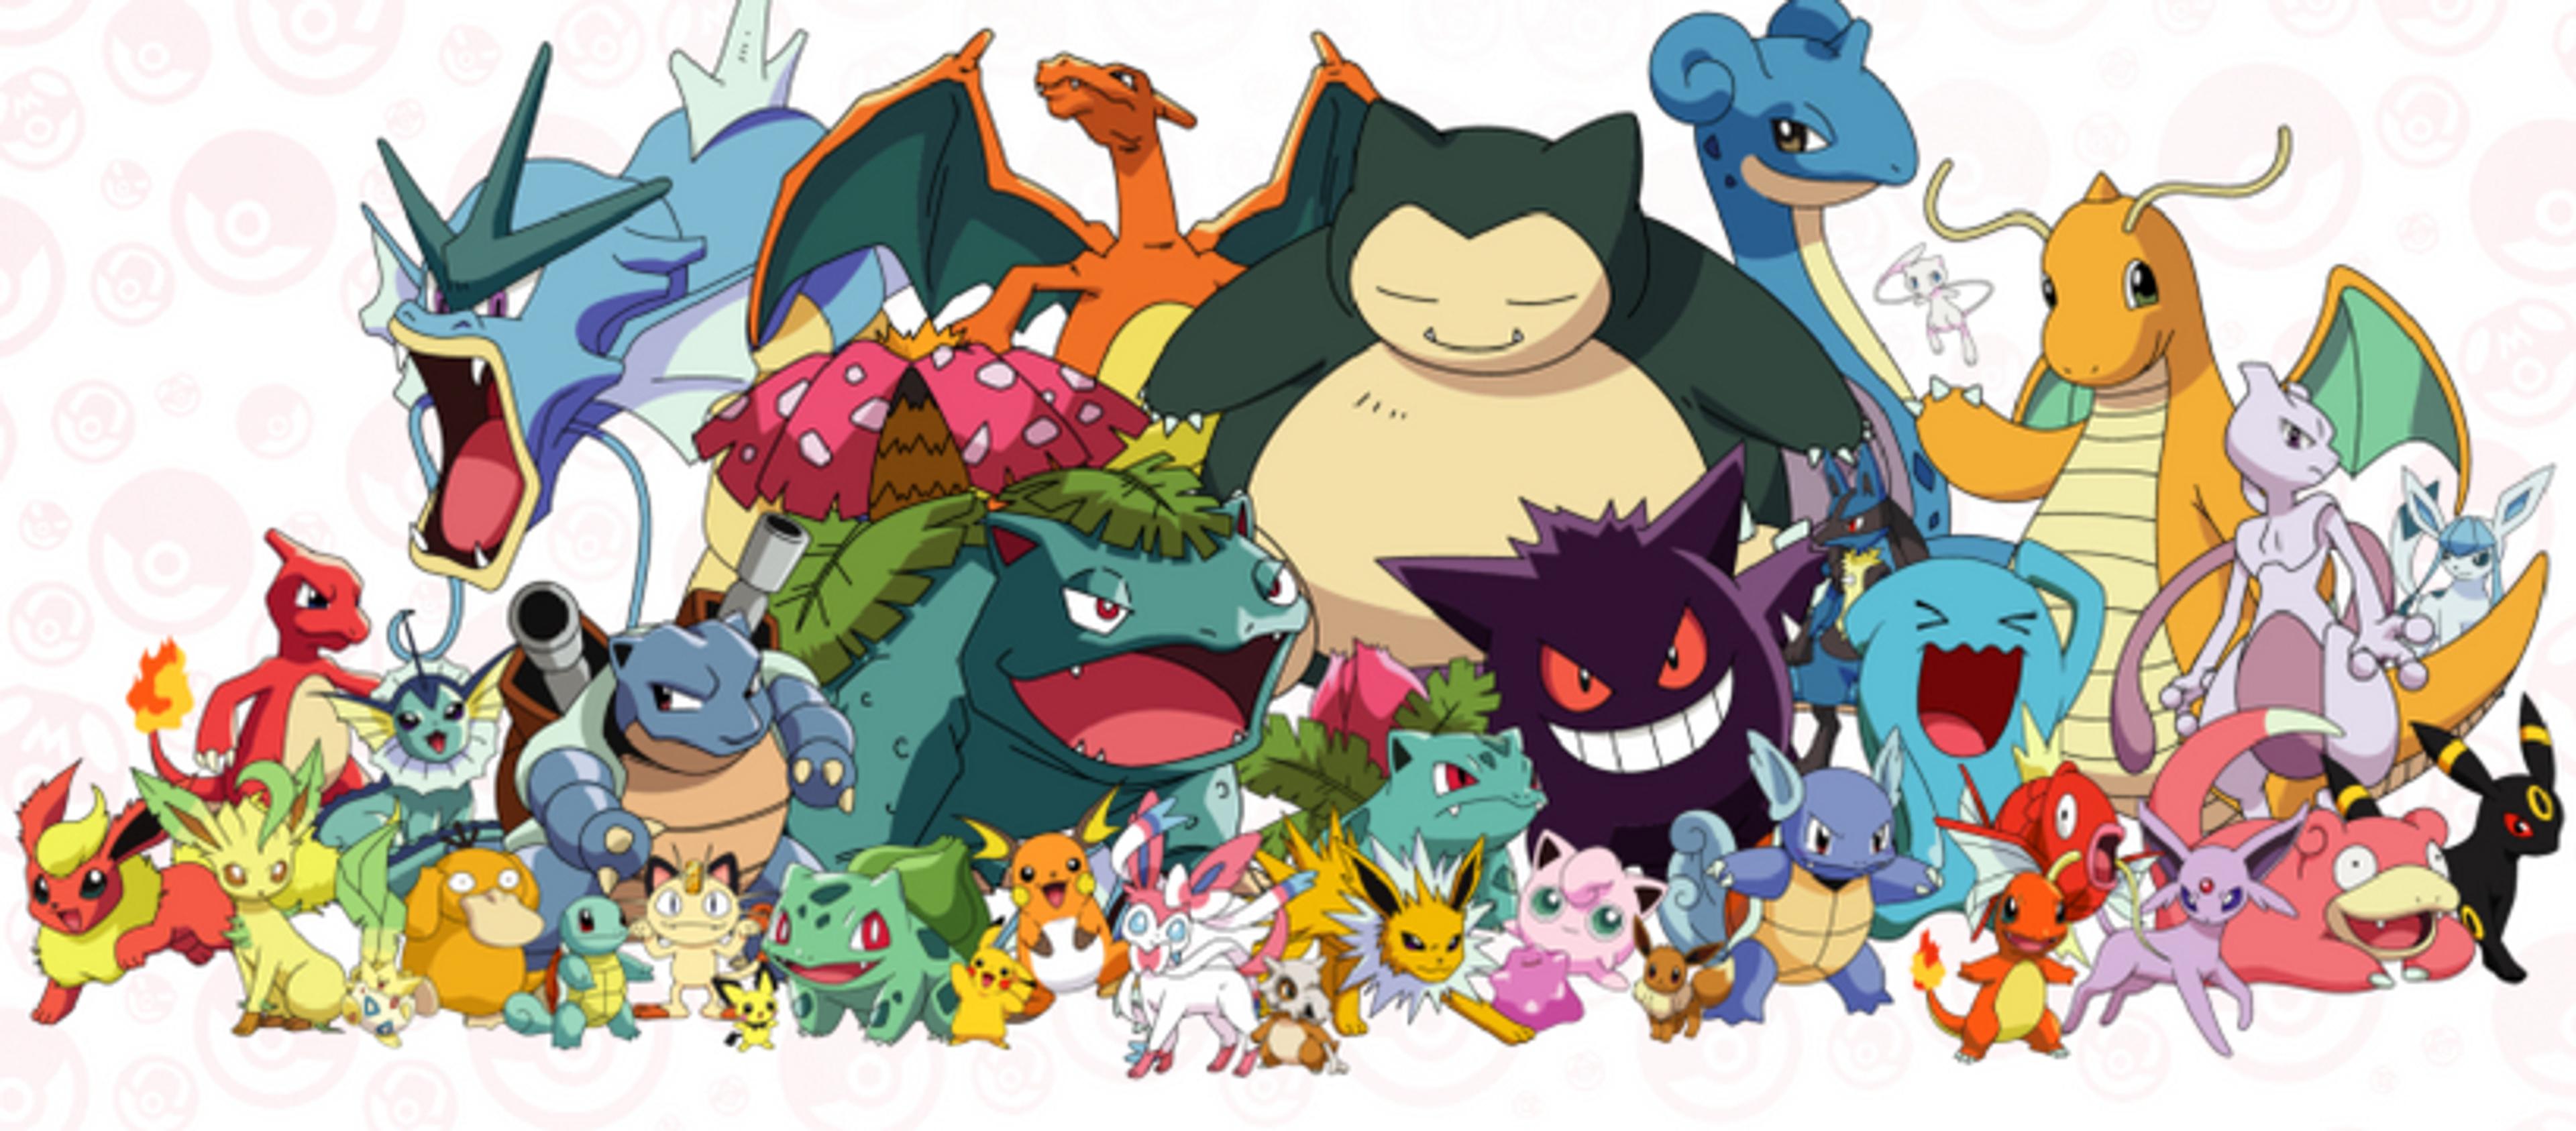 The Design Evolution of the Pokémon Franchise [1996 - 2020]